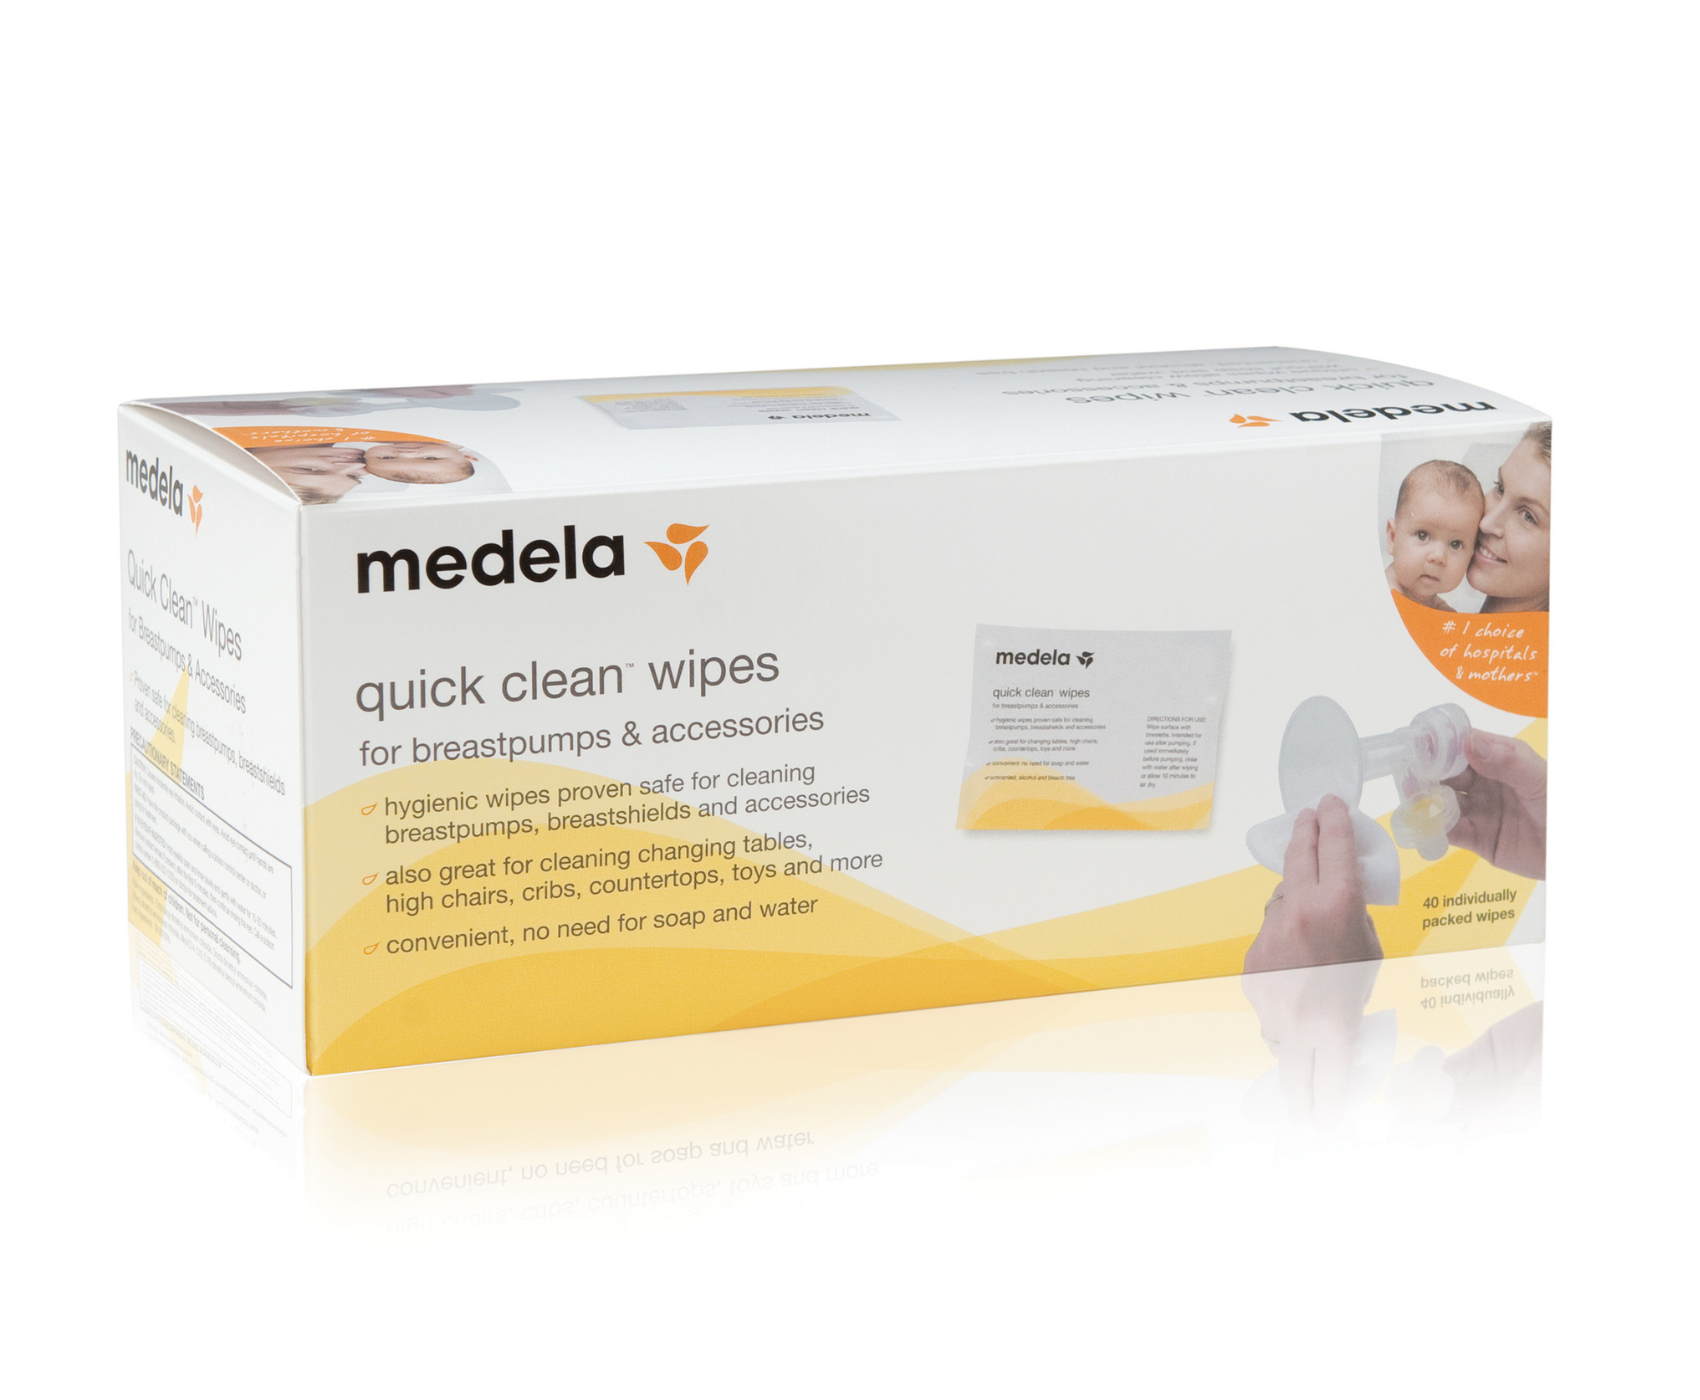 https://acelleron.com/wp-content/uploads/2020/10/Medela-Quick-Clean-Wipes_1700x1400.png